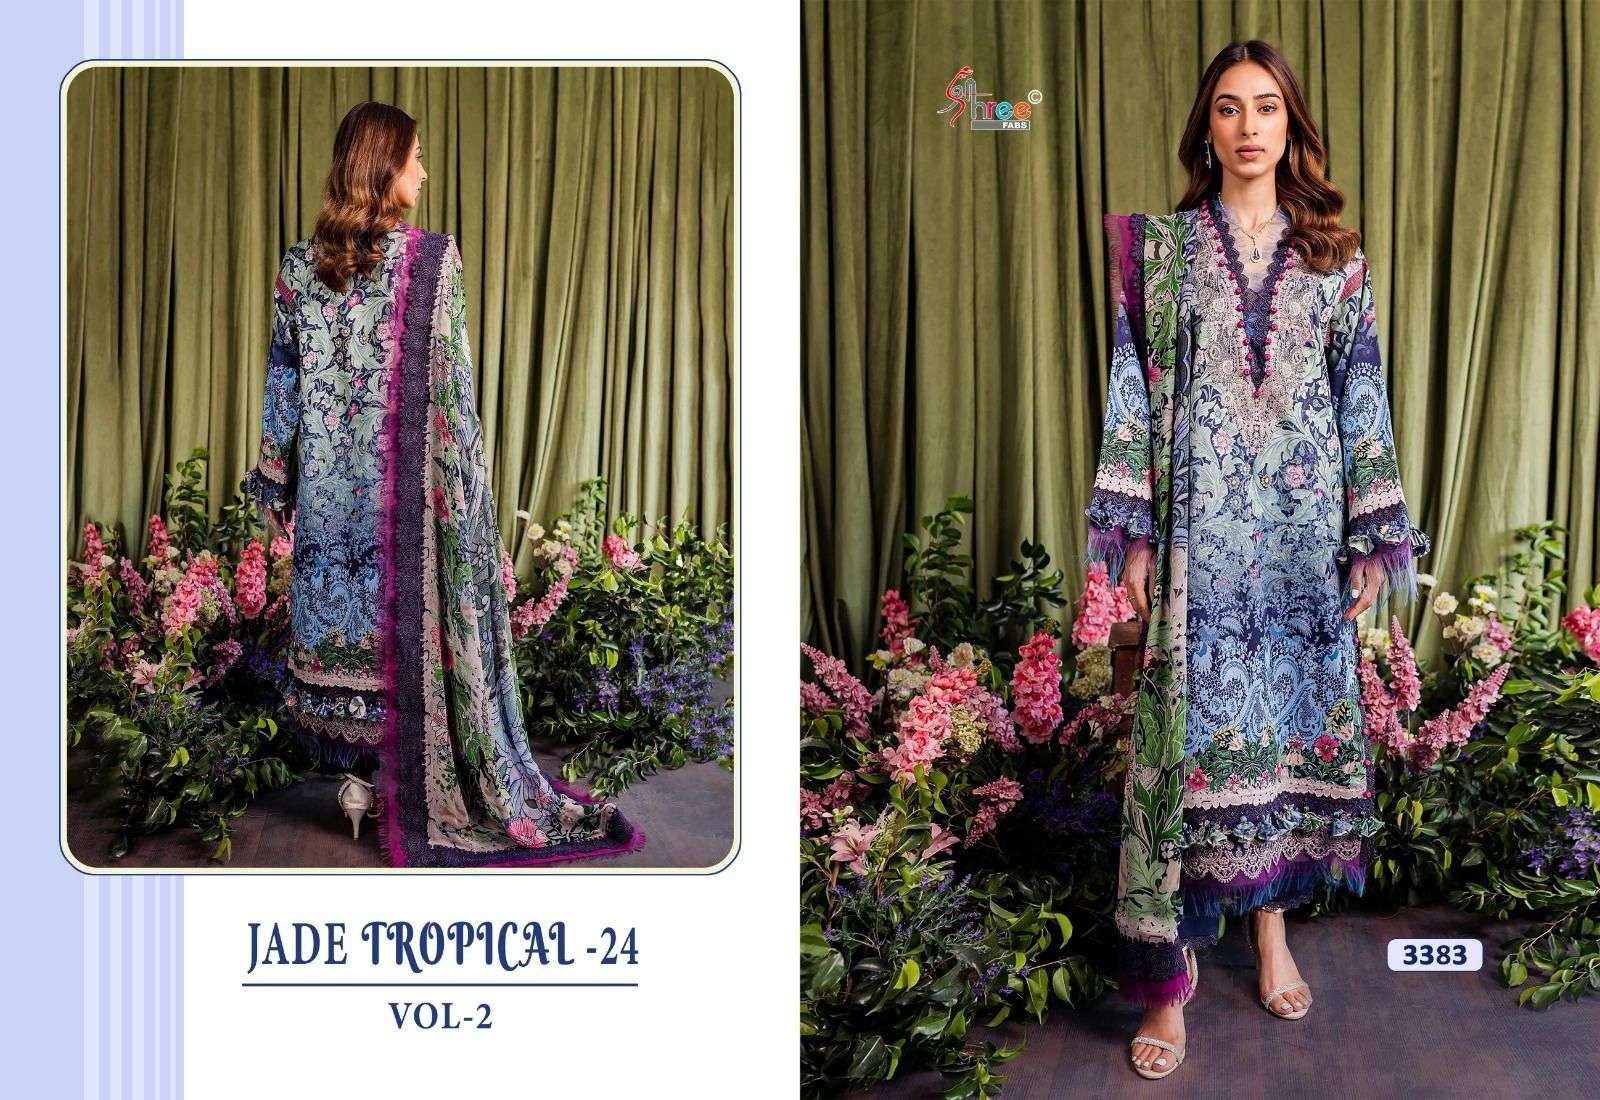 Shree Jade Tropical 24 Vol 2 Chiffon Dupatta Pakistani Suits Wholesale catalog